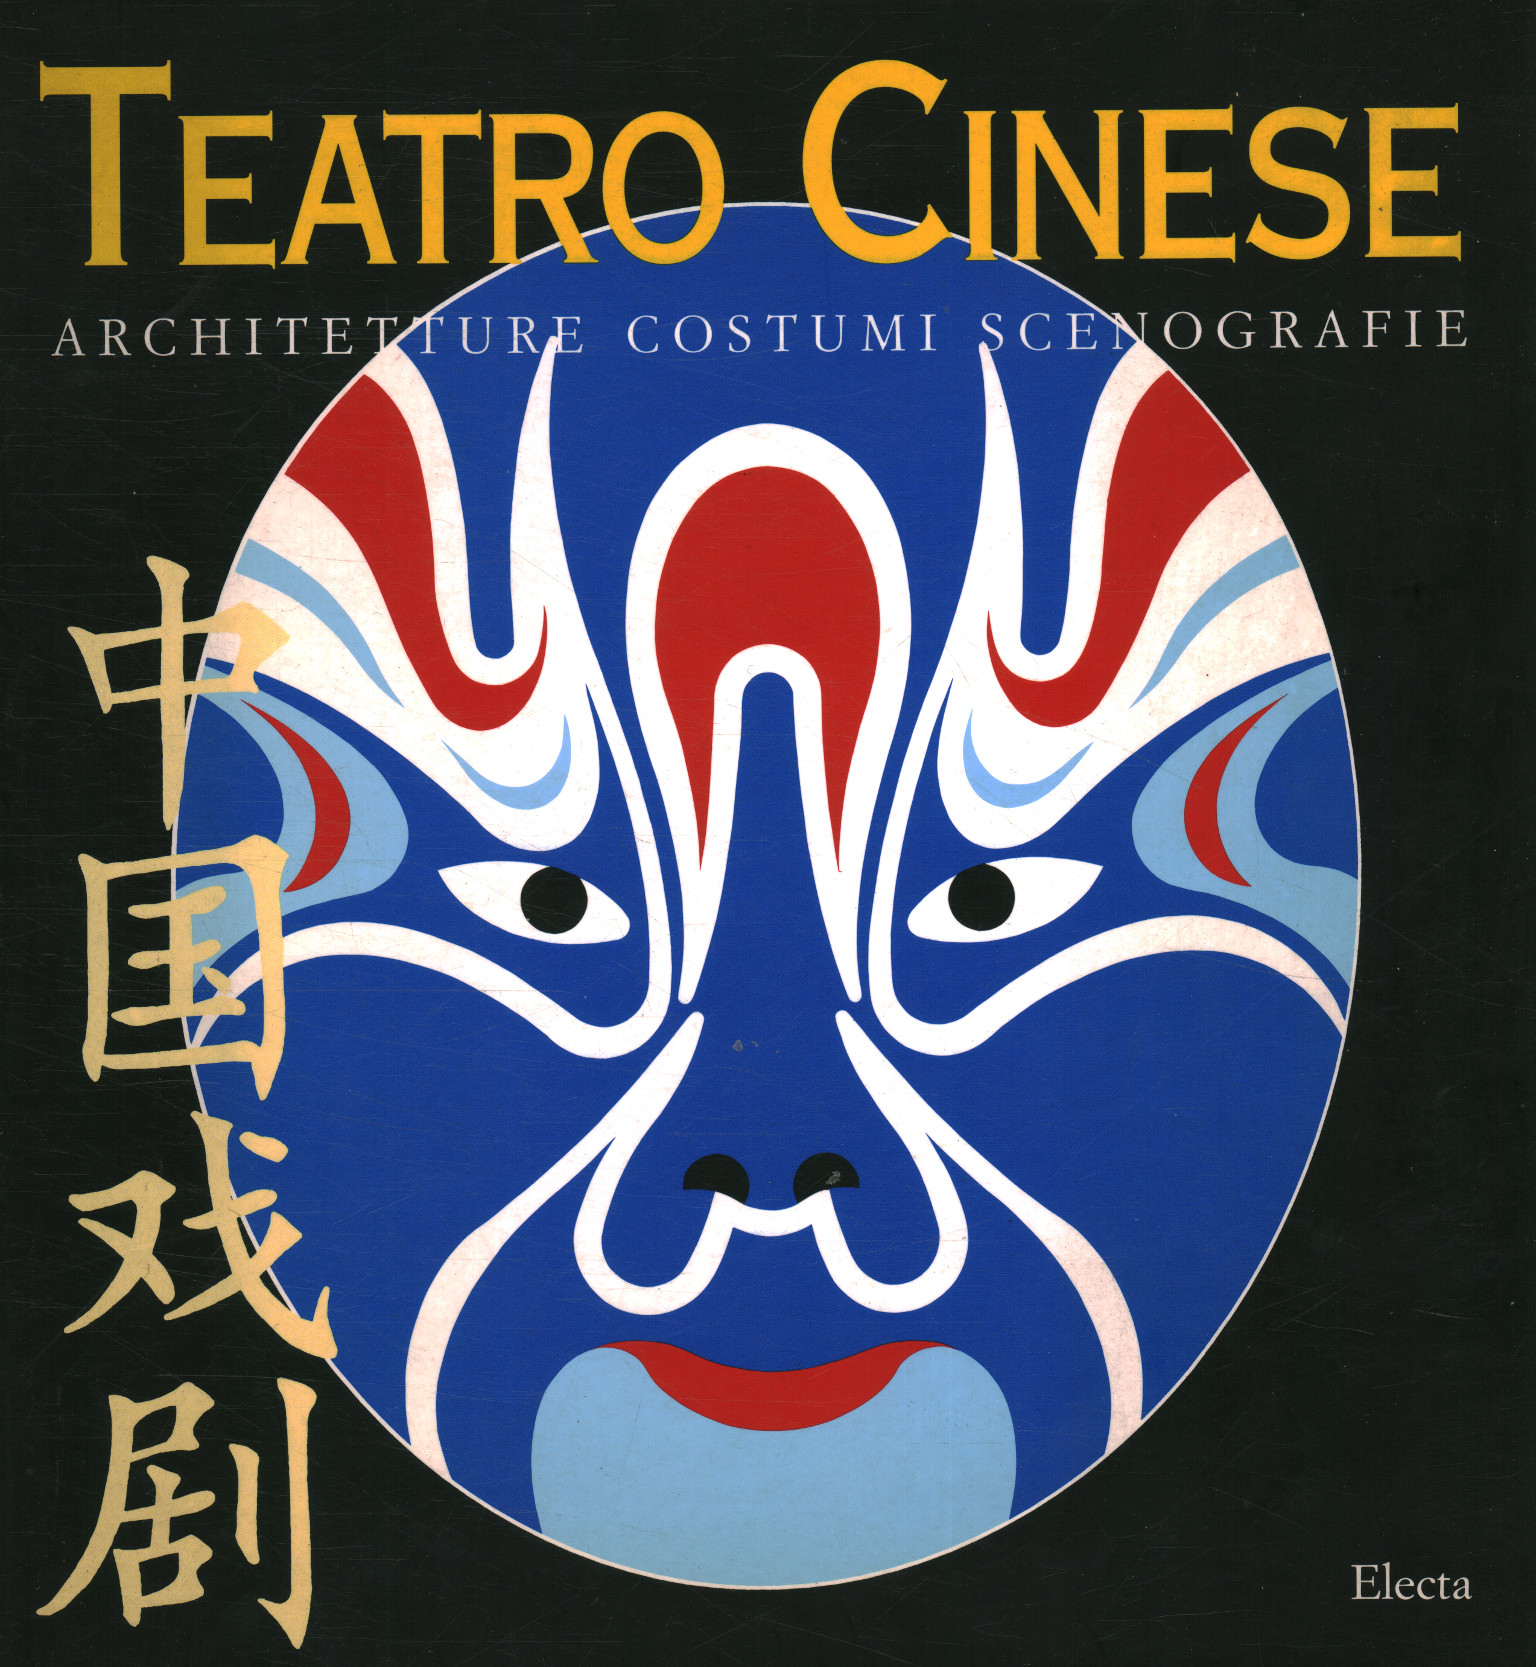 Chinesisches Theater